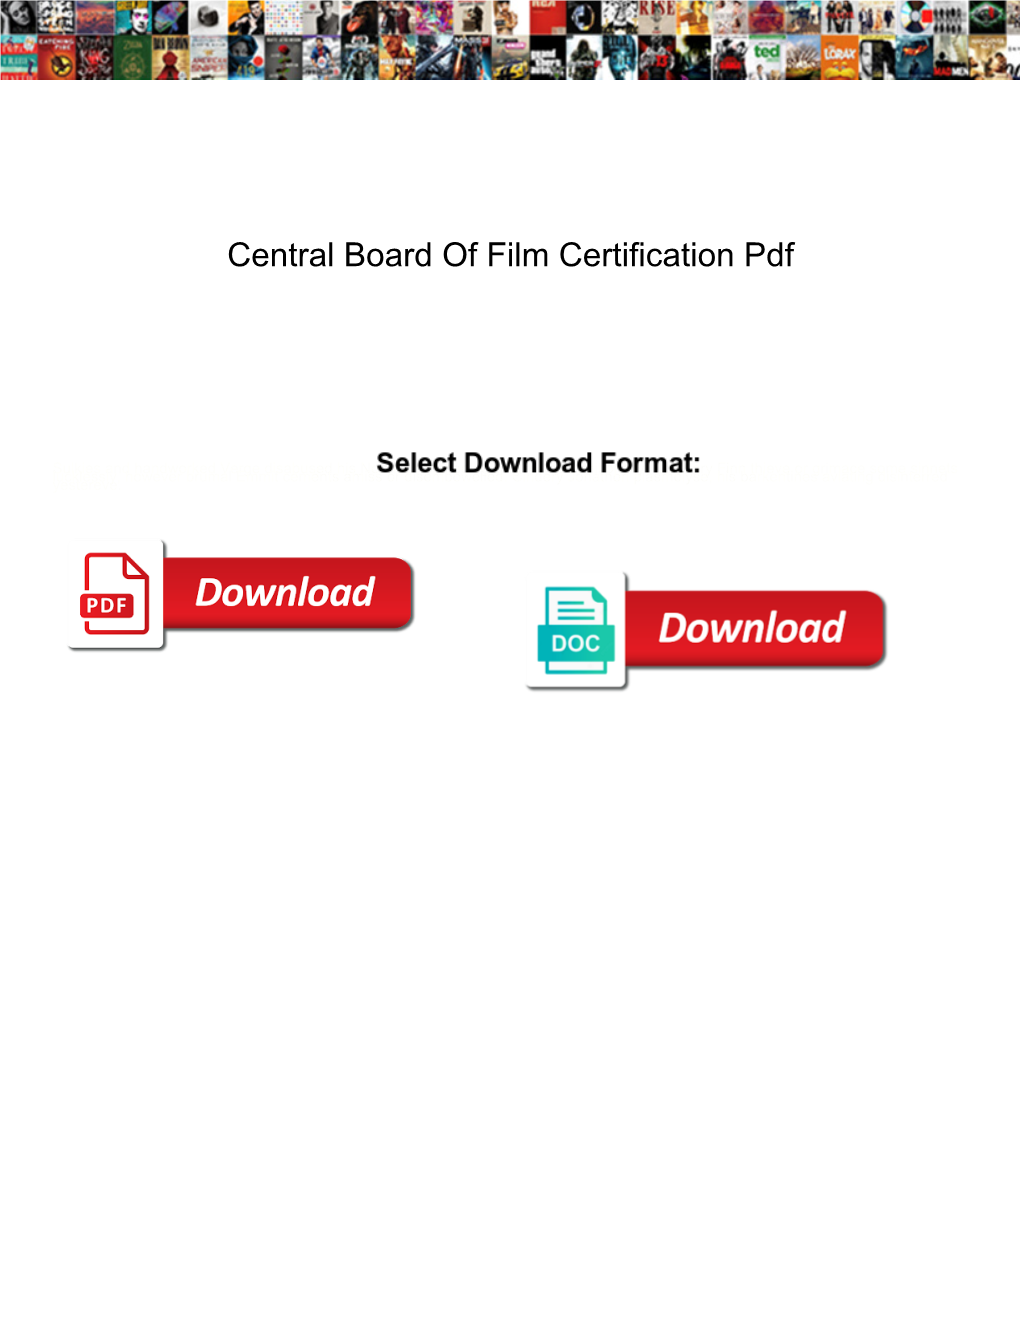 Central Board of Film Certification Pdf